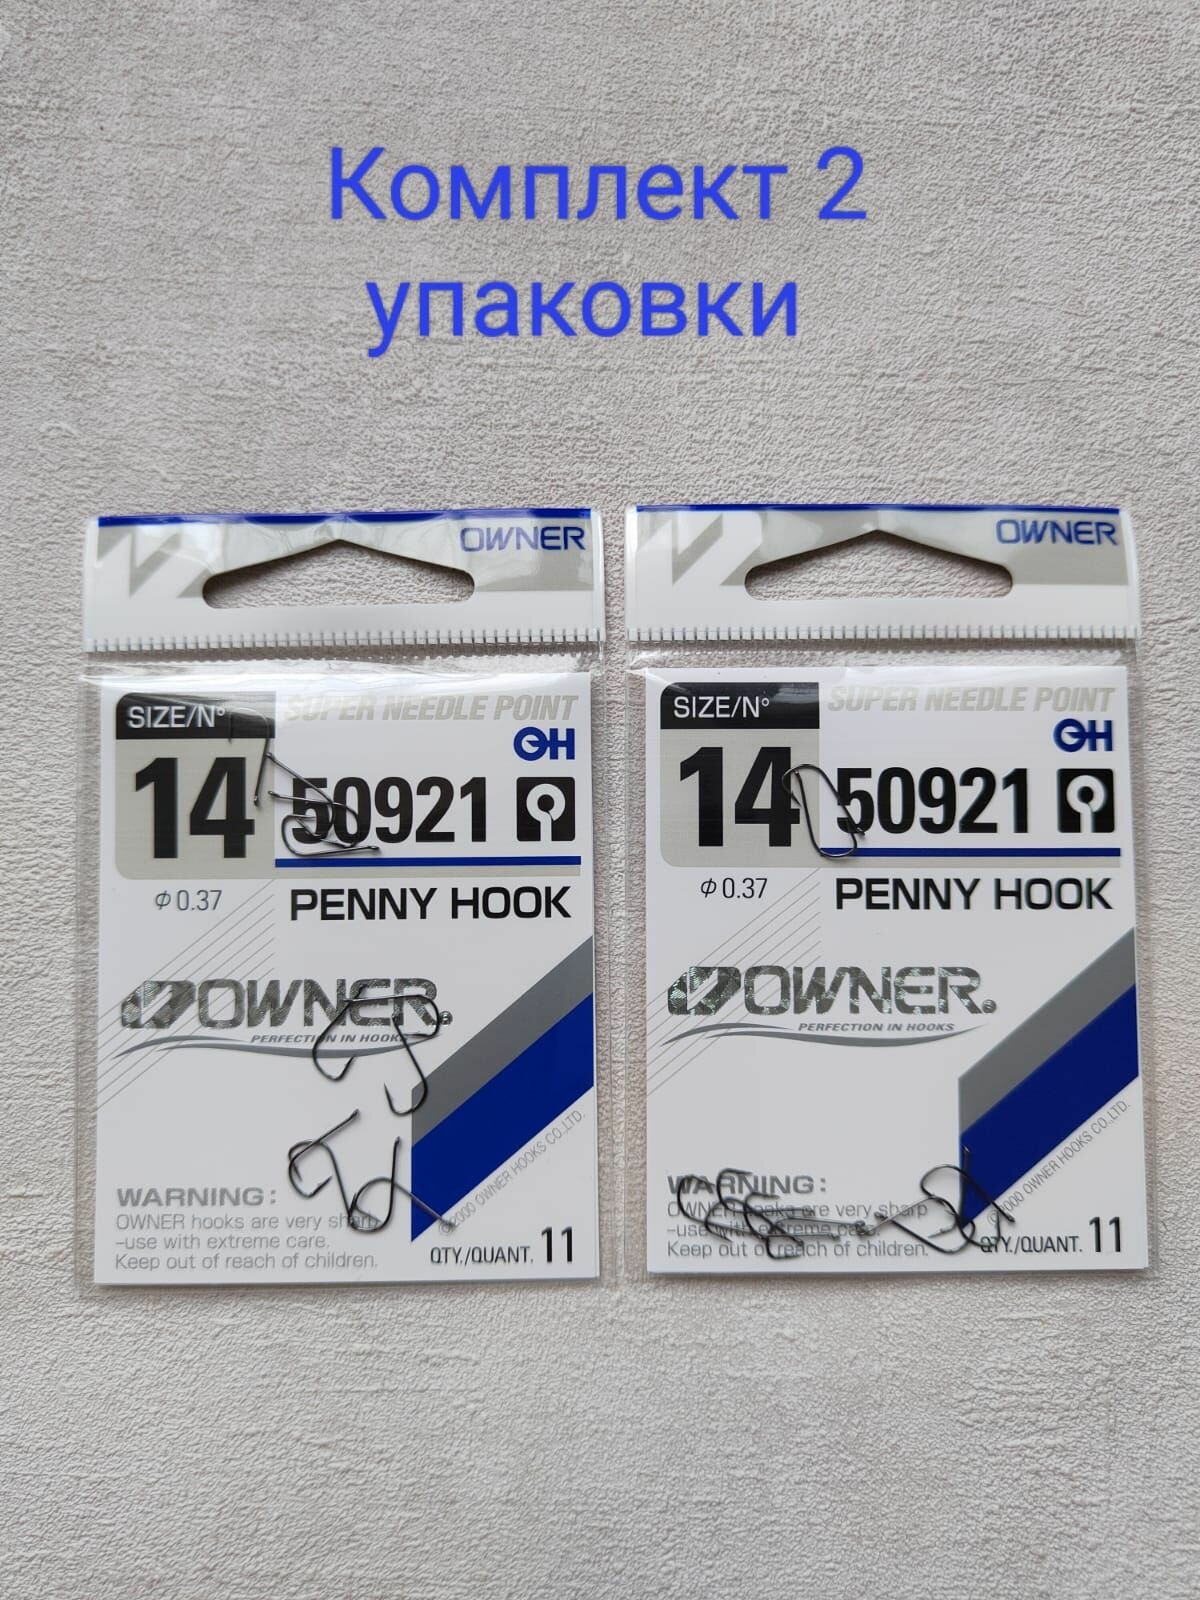 Крючки OWNER Penny hook 50921 №14, 2 упаковки, 22шт.